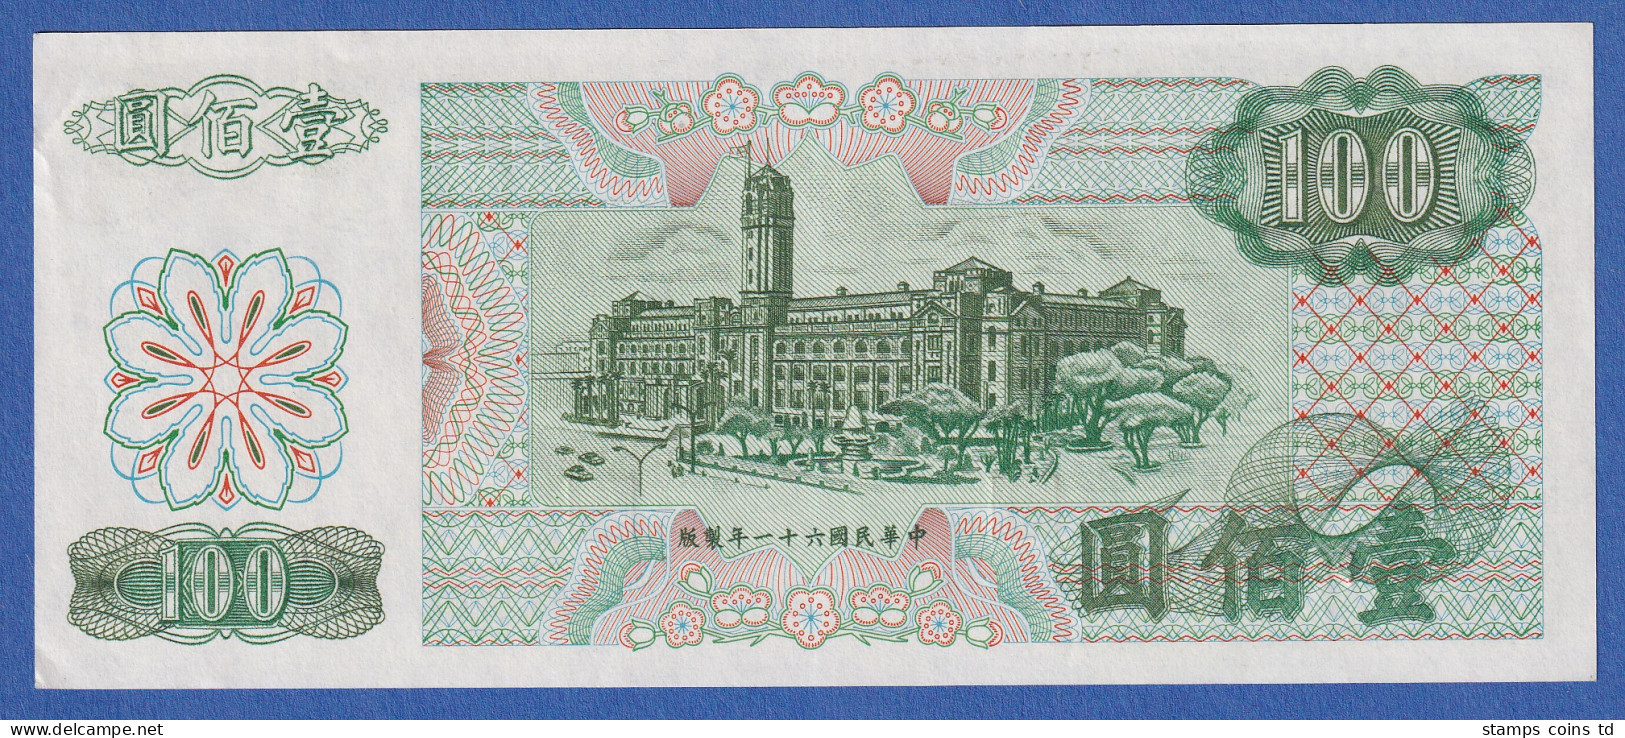 China Taiwan 1972 Banknote 100 Yuan Bankfrisch, Unzirkuliert. - Chine